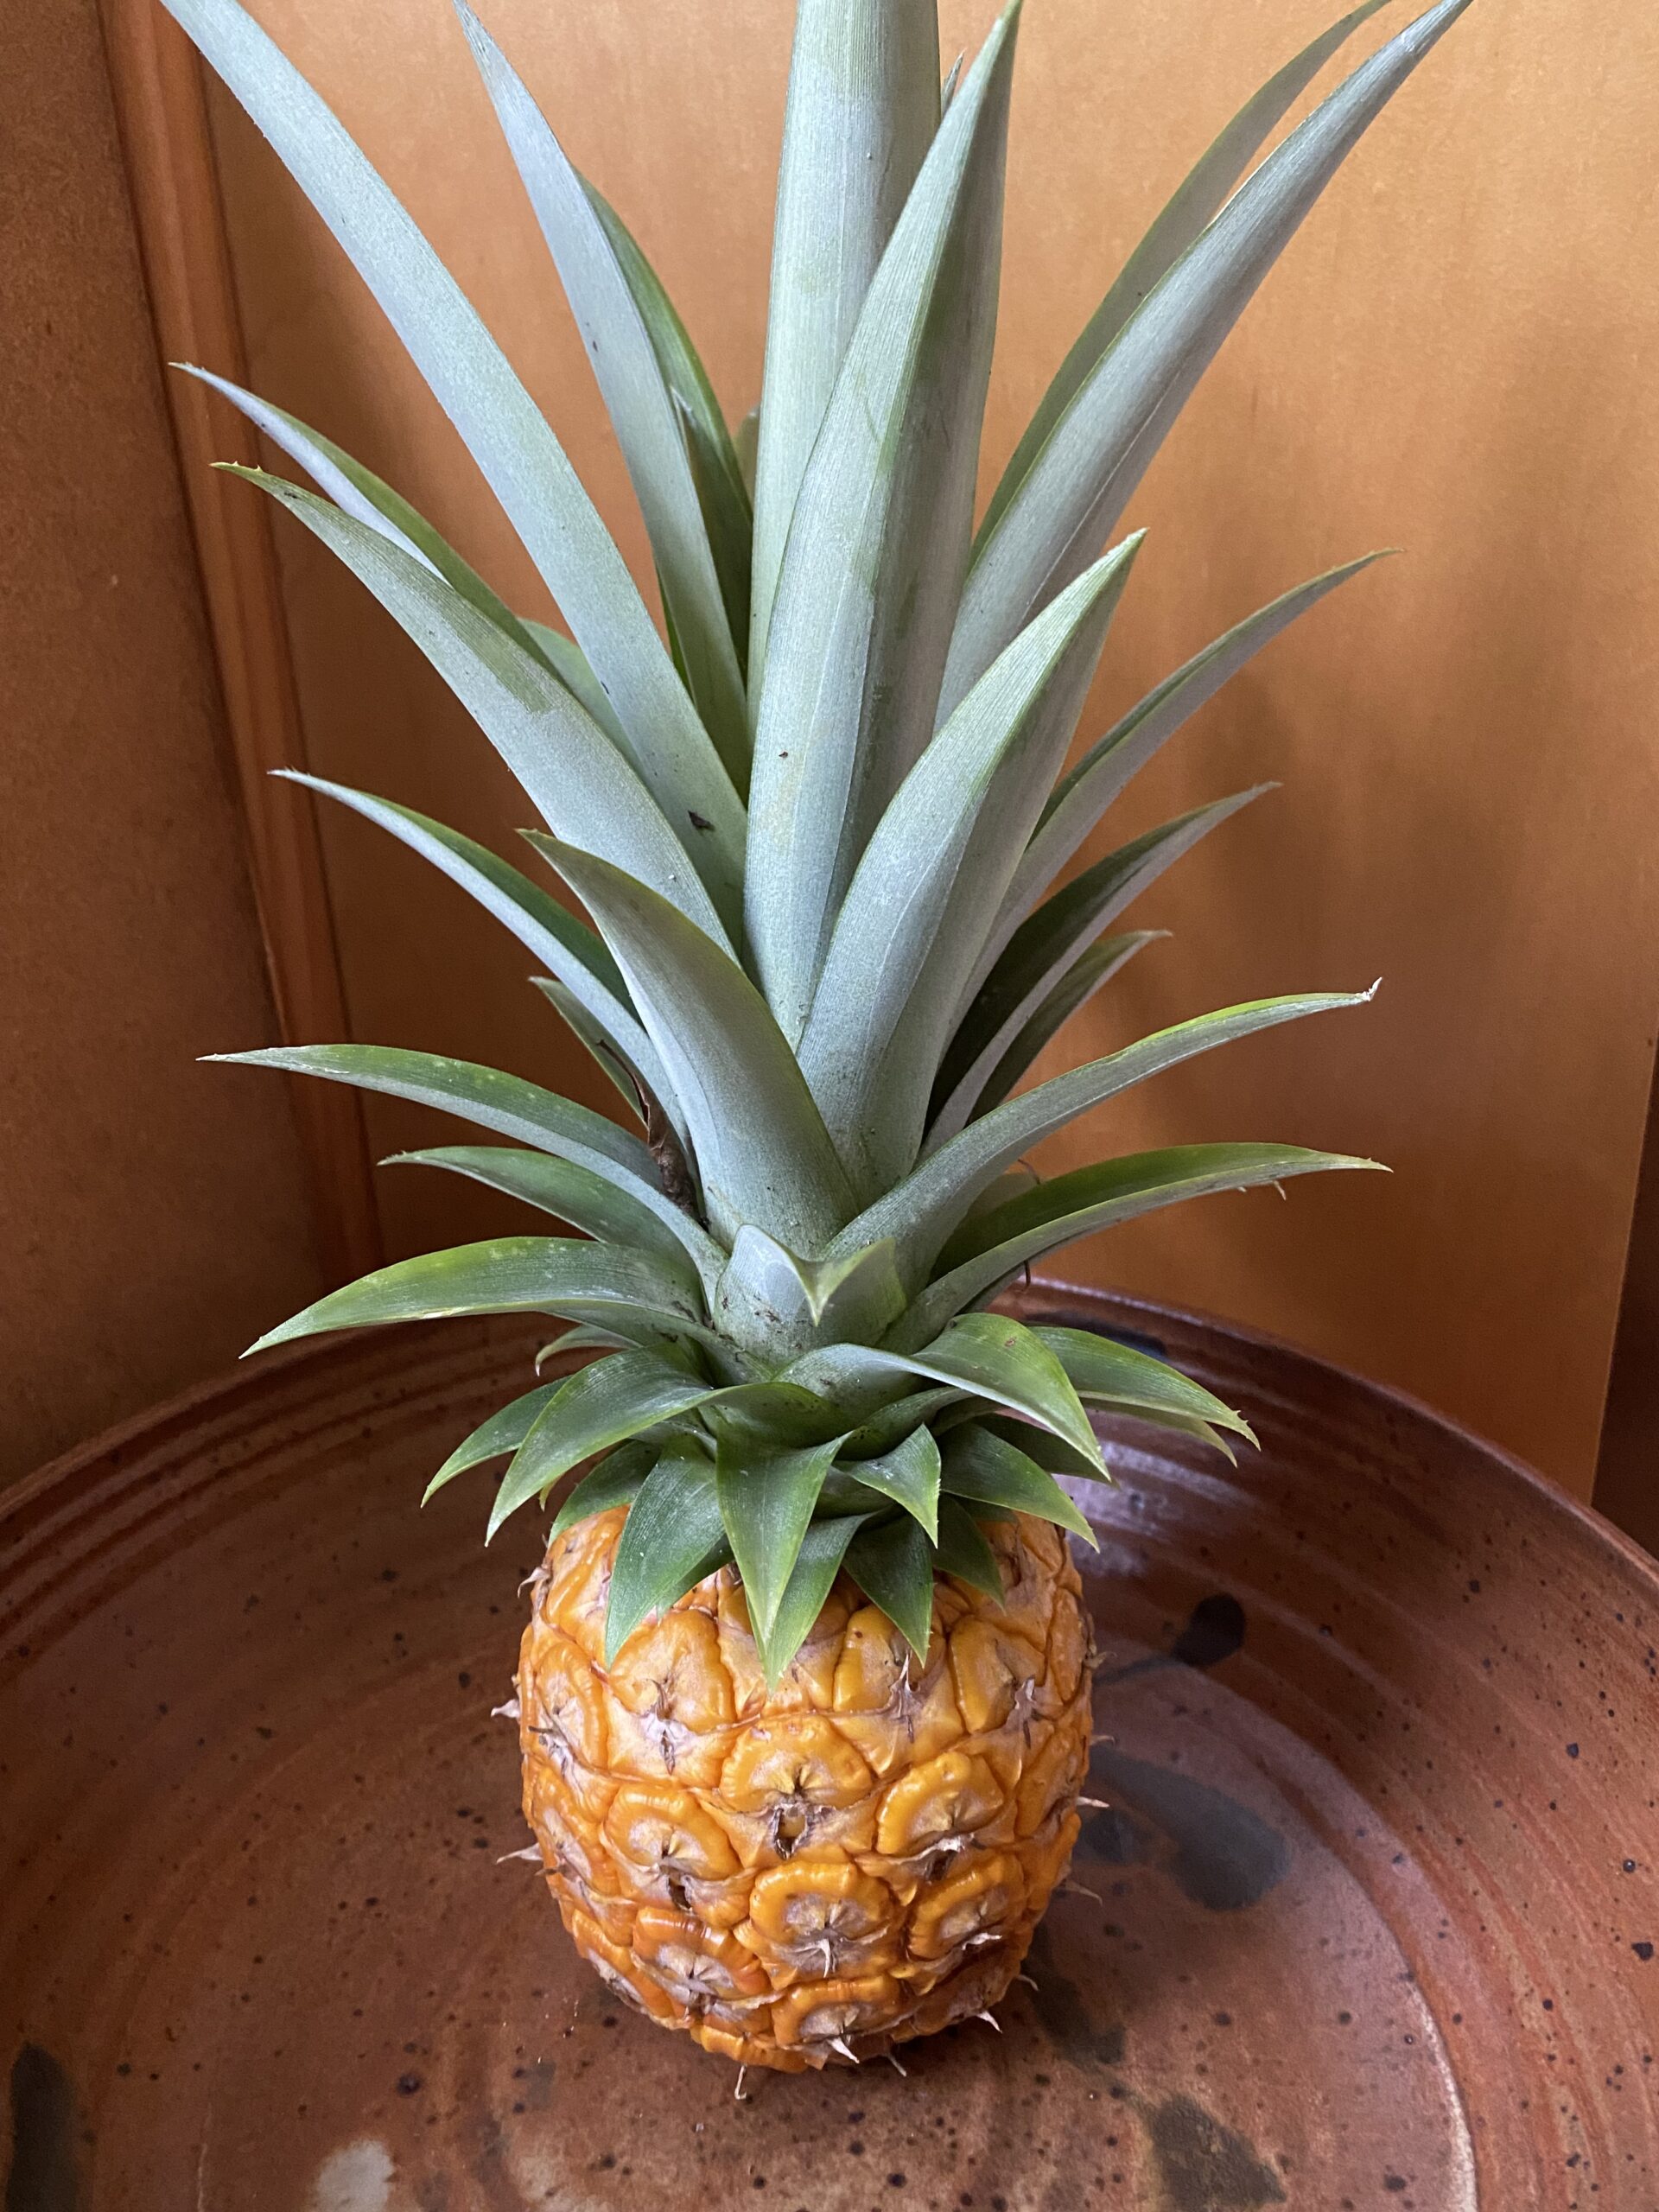 Small pineapple